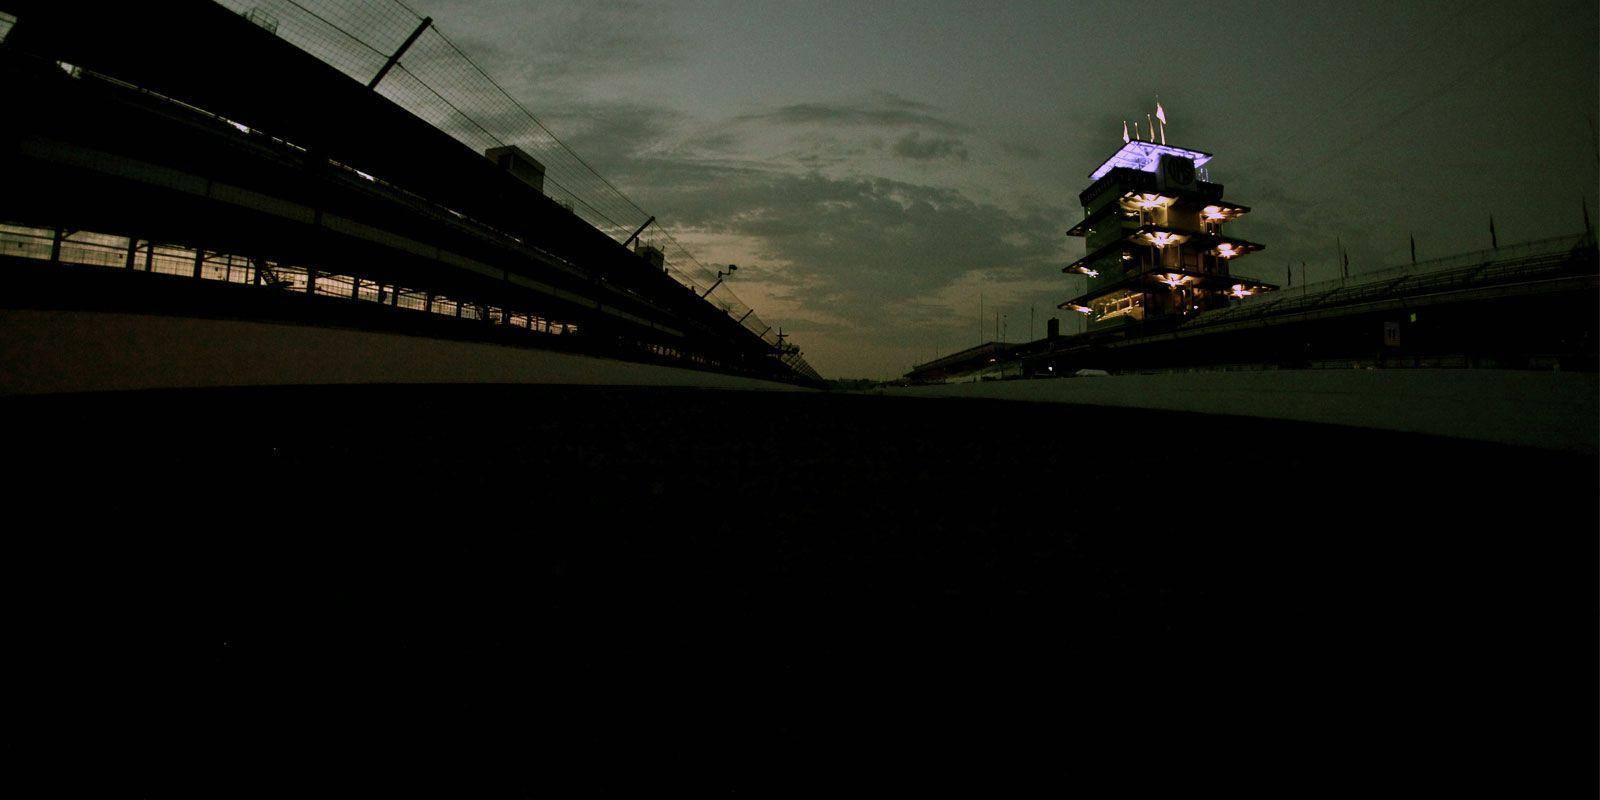 Illuminated Night At The Indianapolis 500 Motor Speedway Background